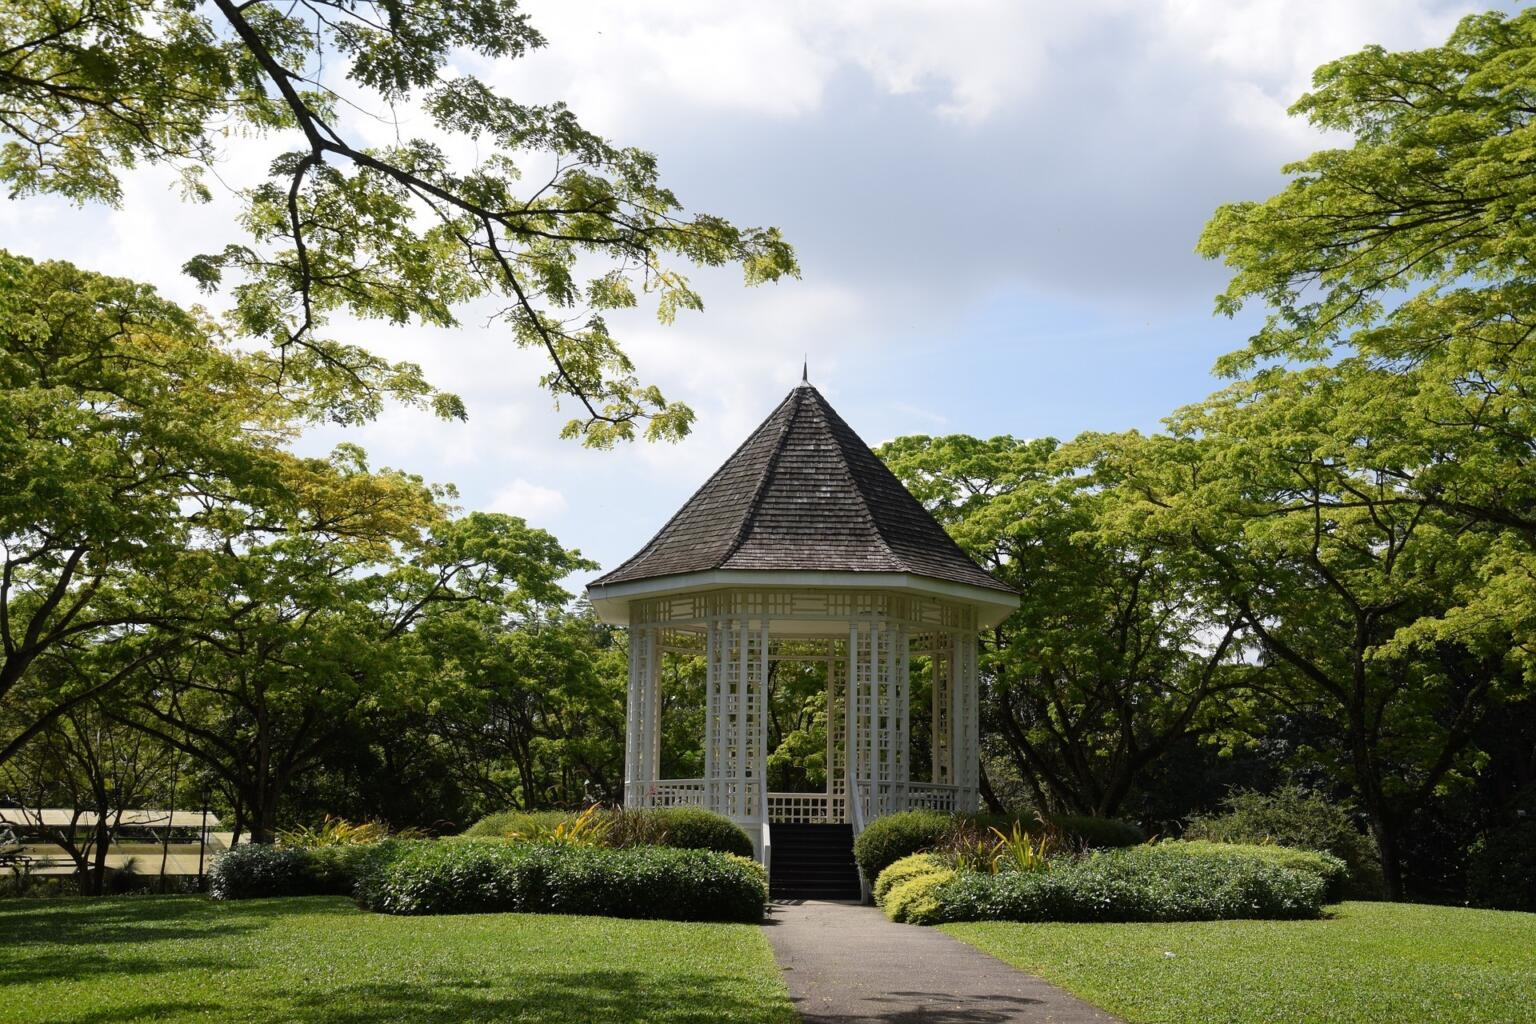 Singapore’s Botanic Gardens